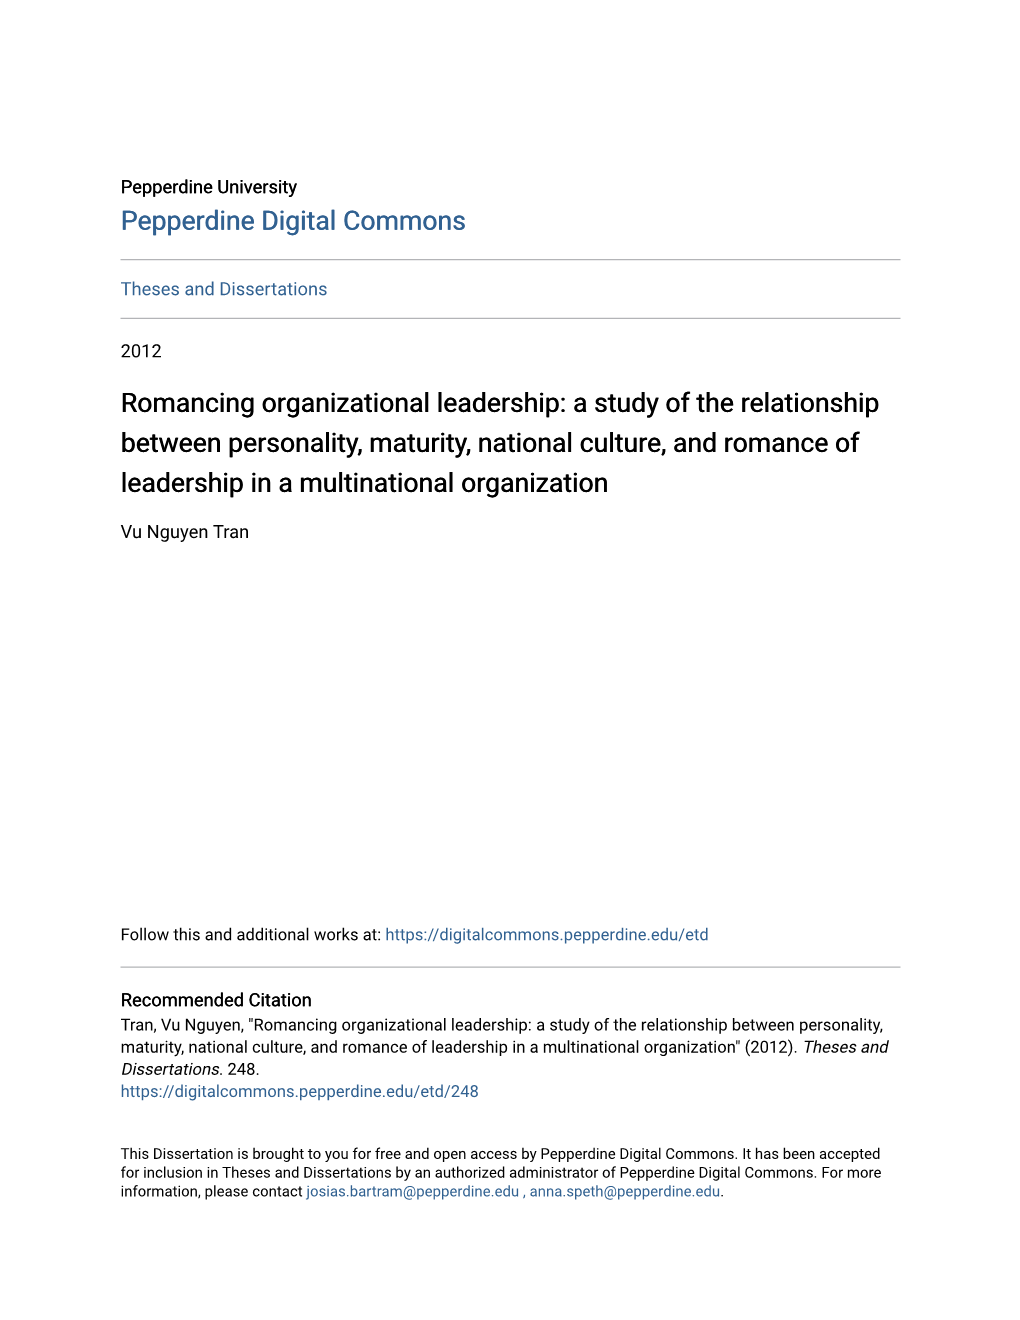 Romancing Organizational Leadership